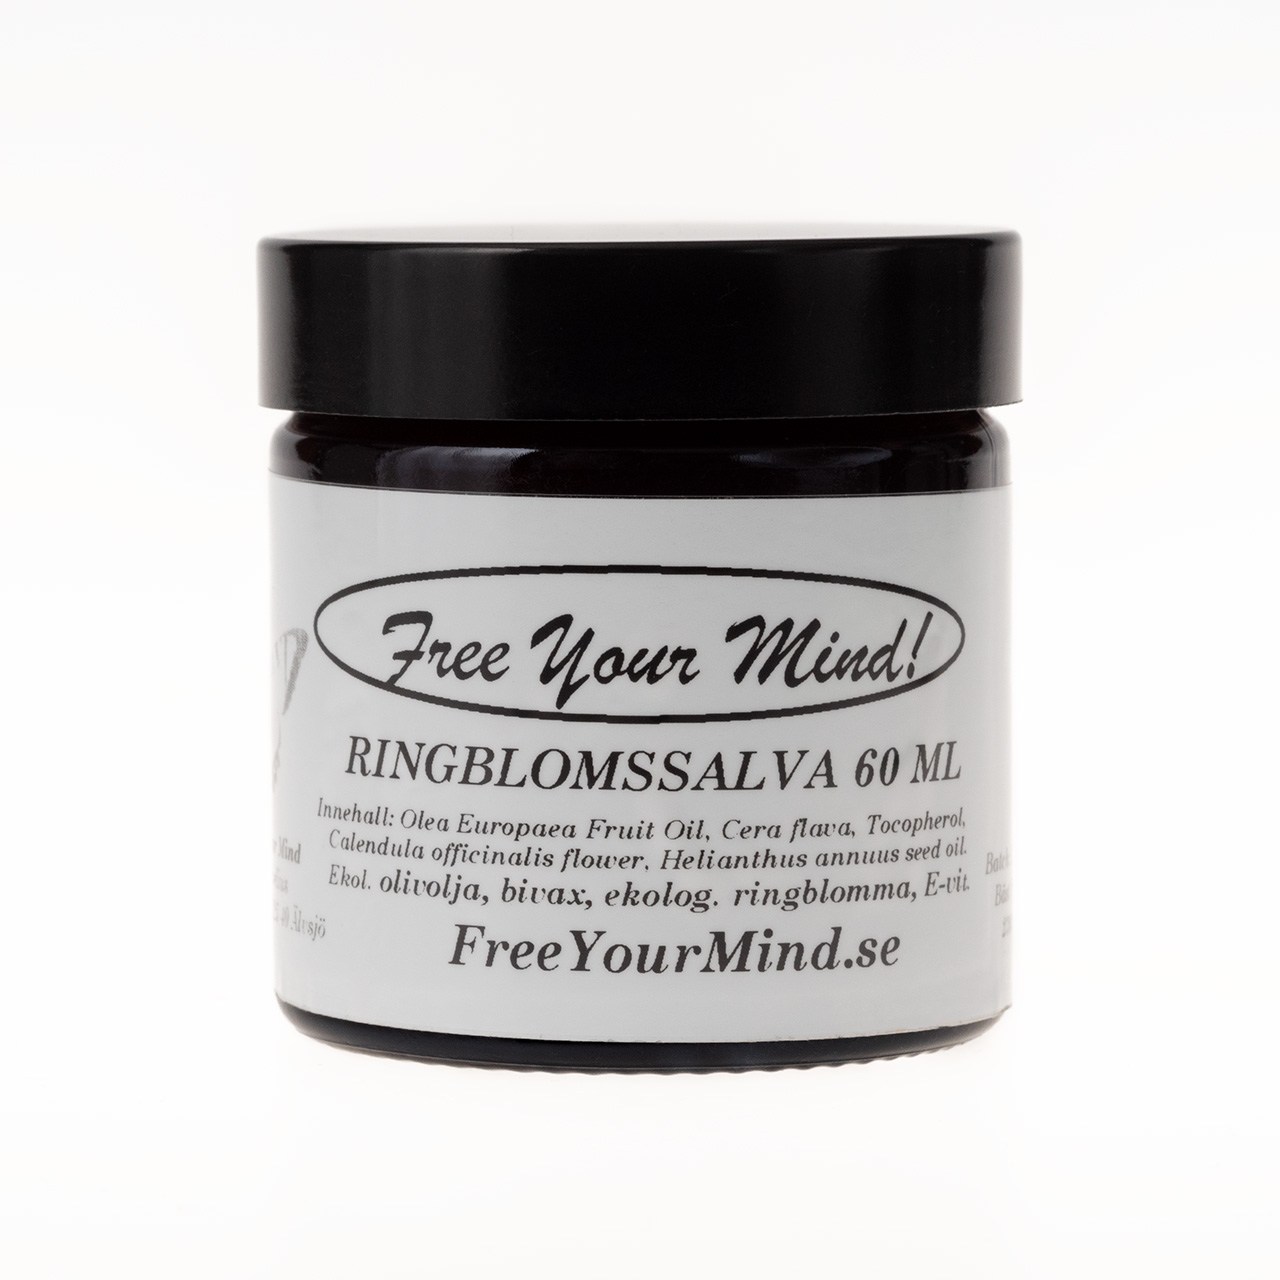 Free Your Mind! Ringblomssalva 60 ml